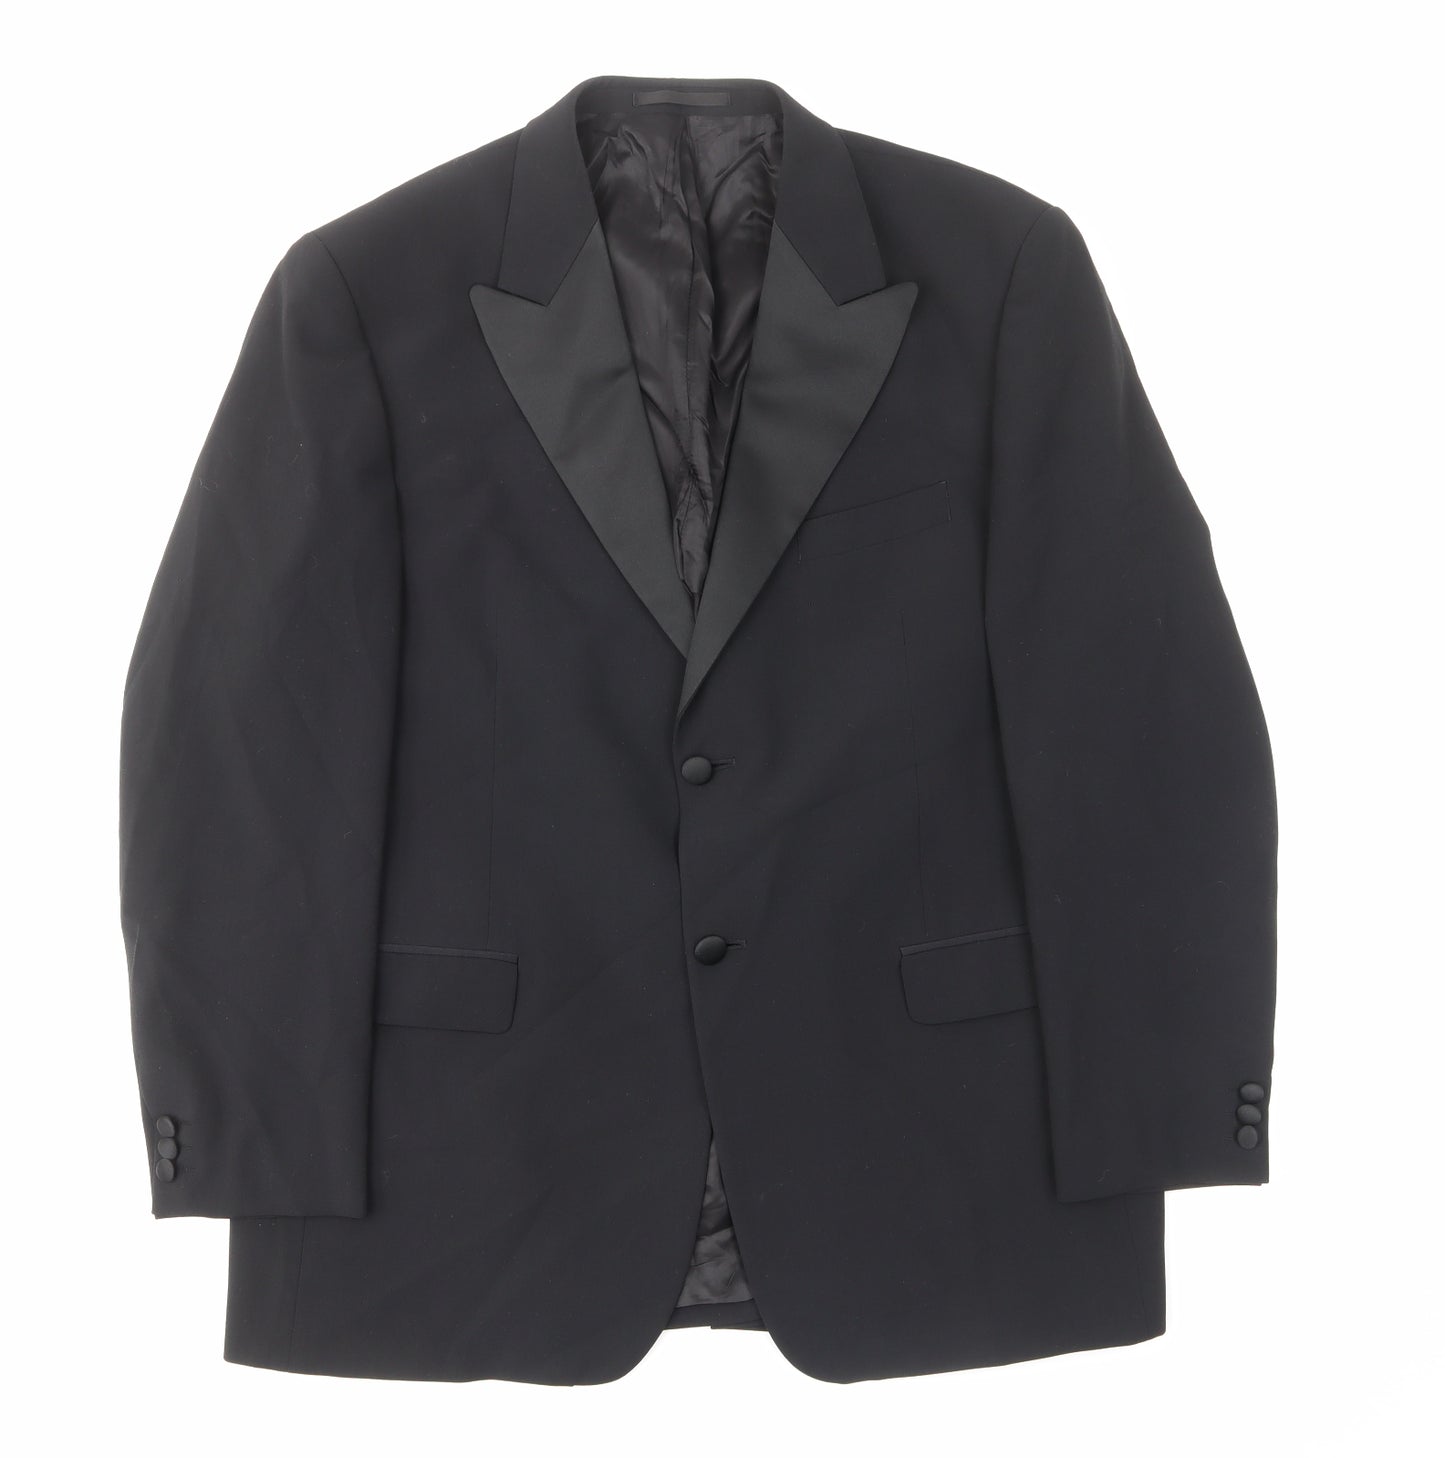 Pierre Cardin Mens Black Polyester Jacket Suit Jacket Size 44 Regular